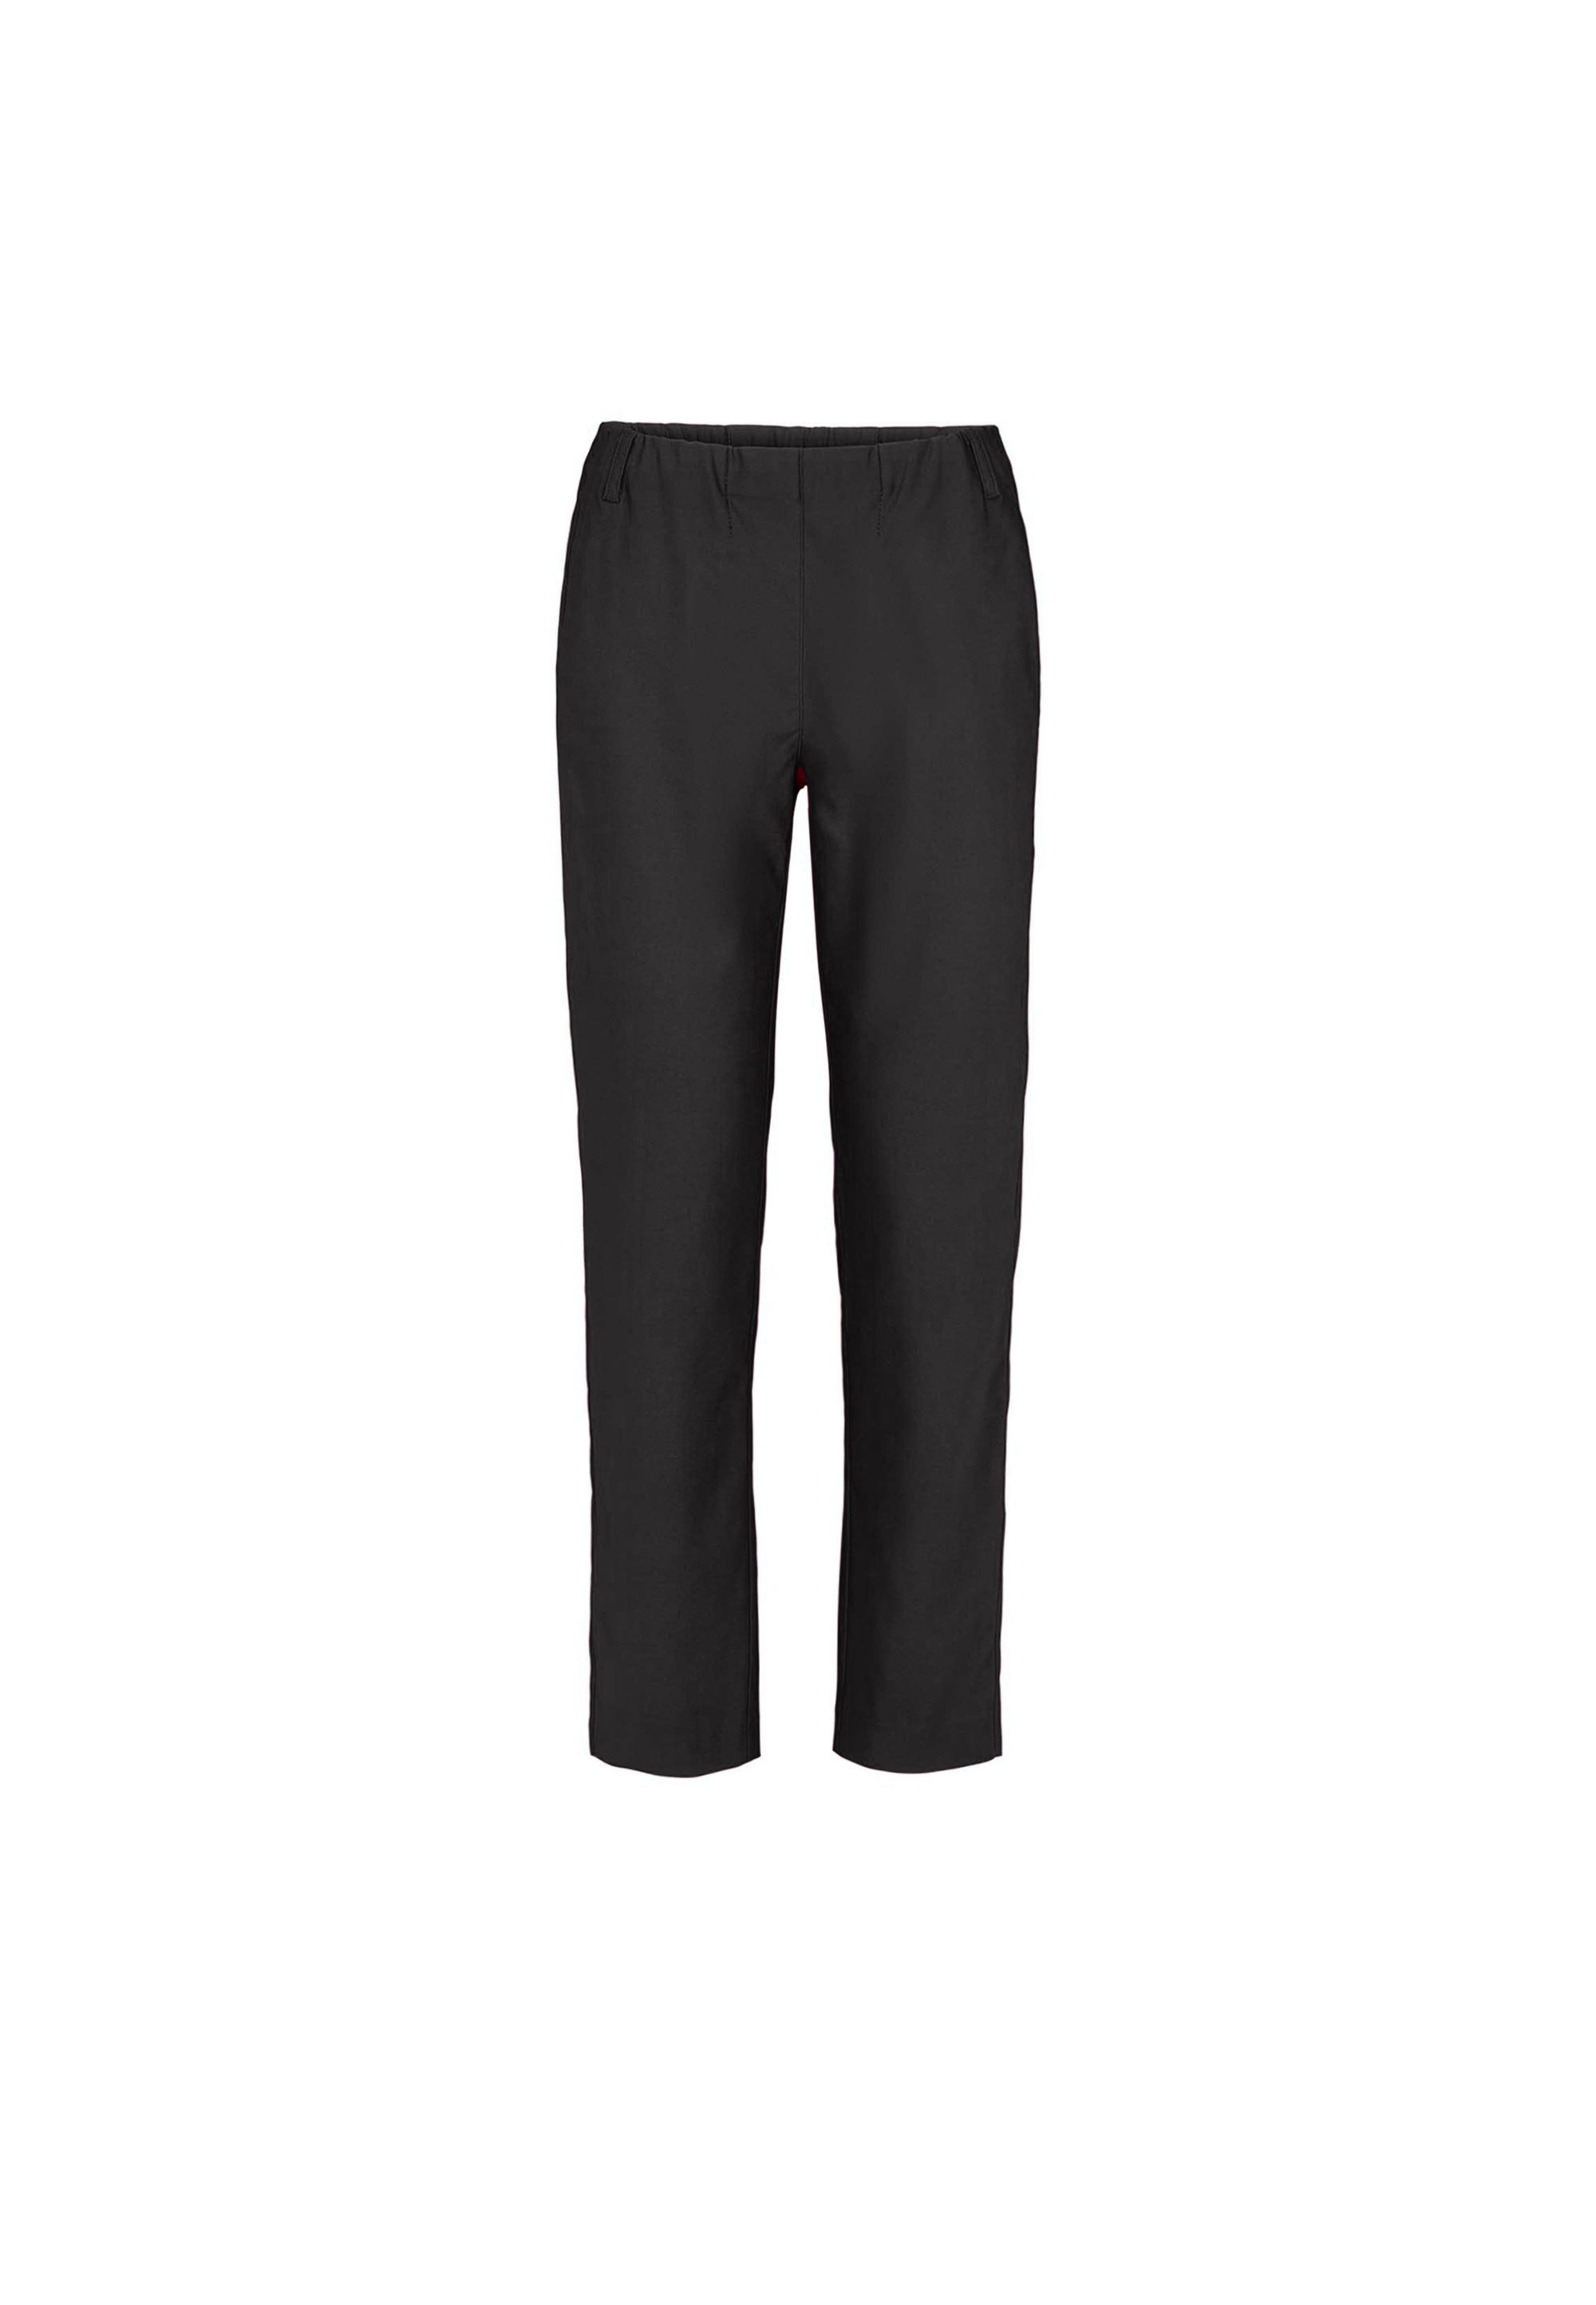 LAURIE Taylor Regular - Short Length Trousers REGULAR 99000 Black